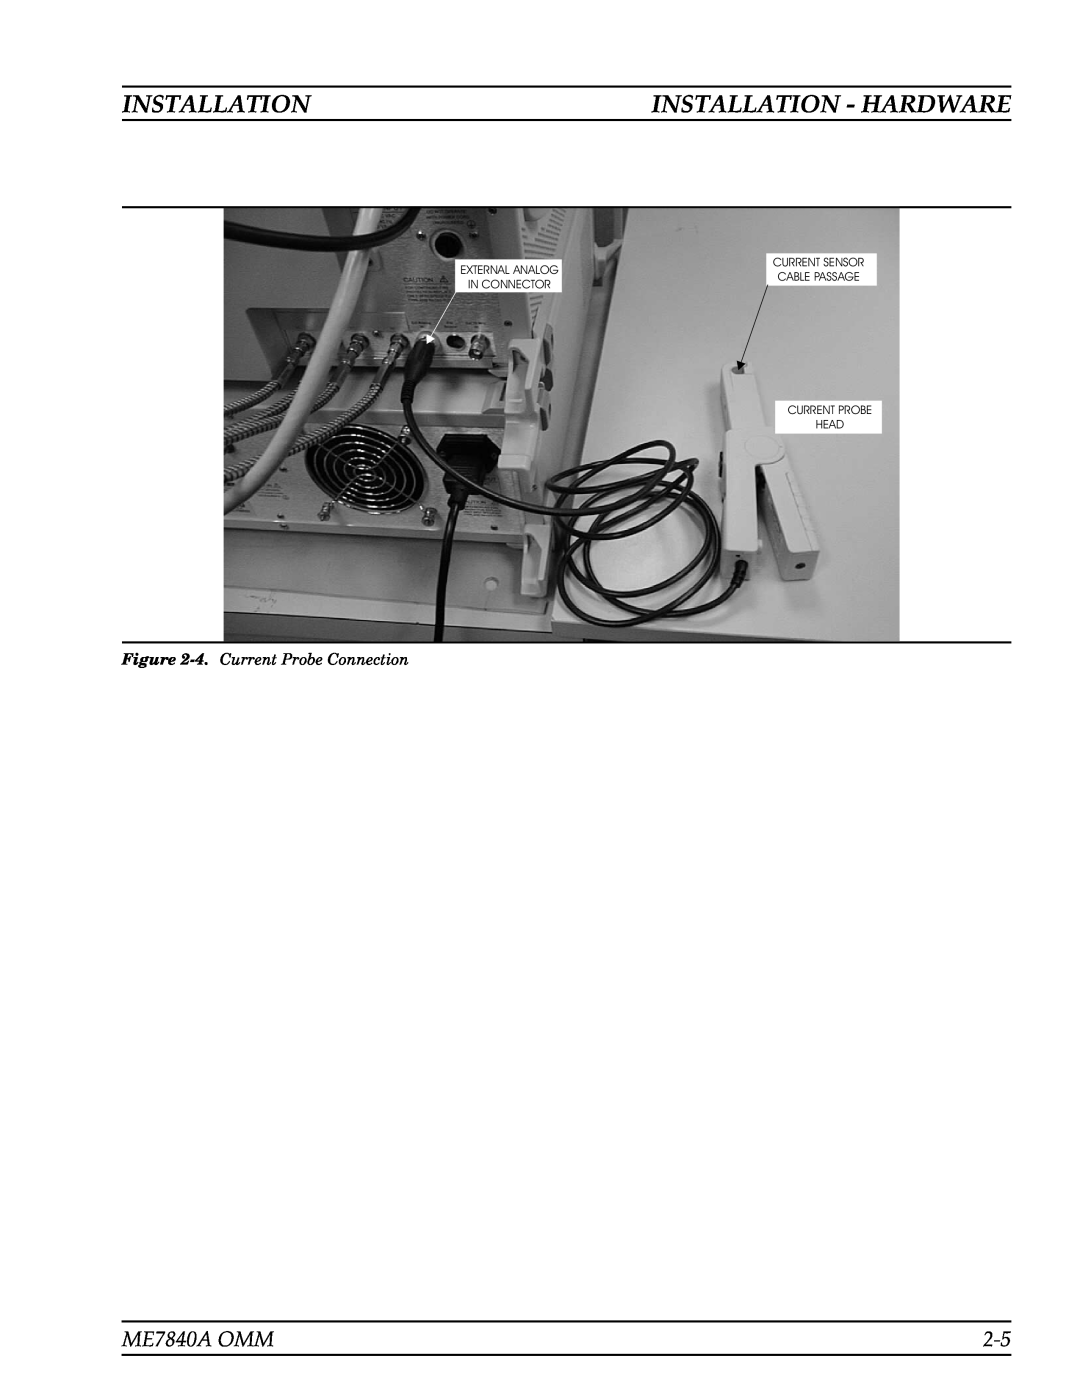 Anritsu Installation - Hardware, ME7840A OMM, 4. Current Probe Connection, External Analog, Current Sensor, Head 